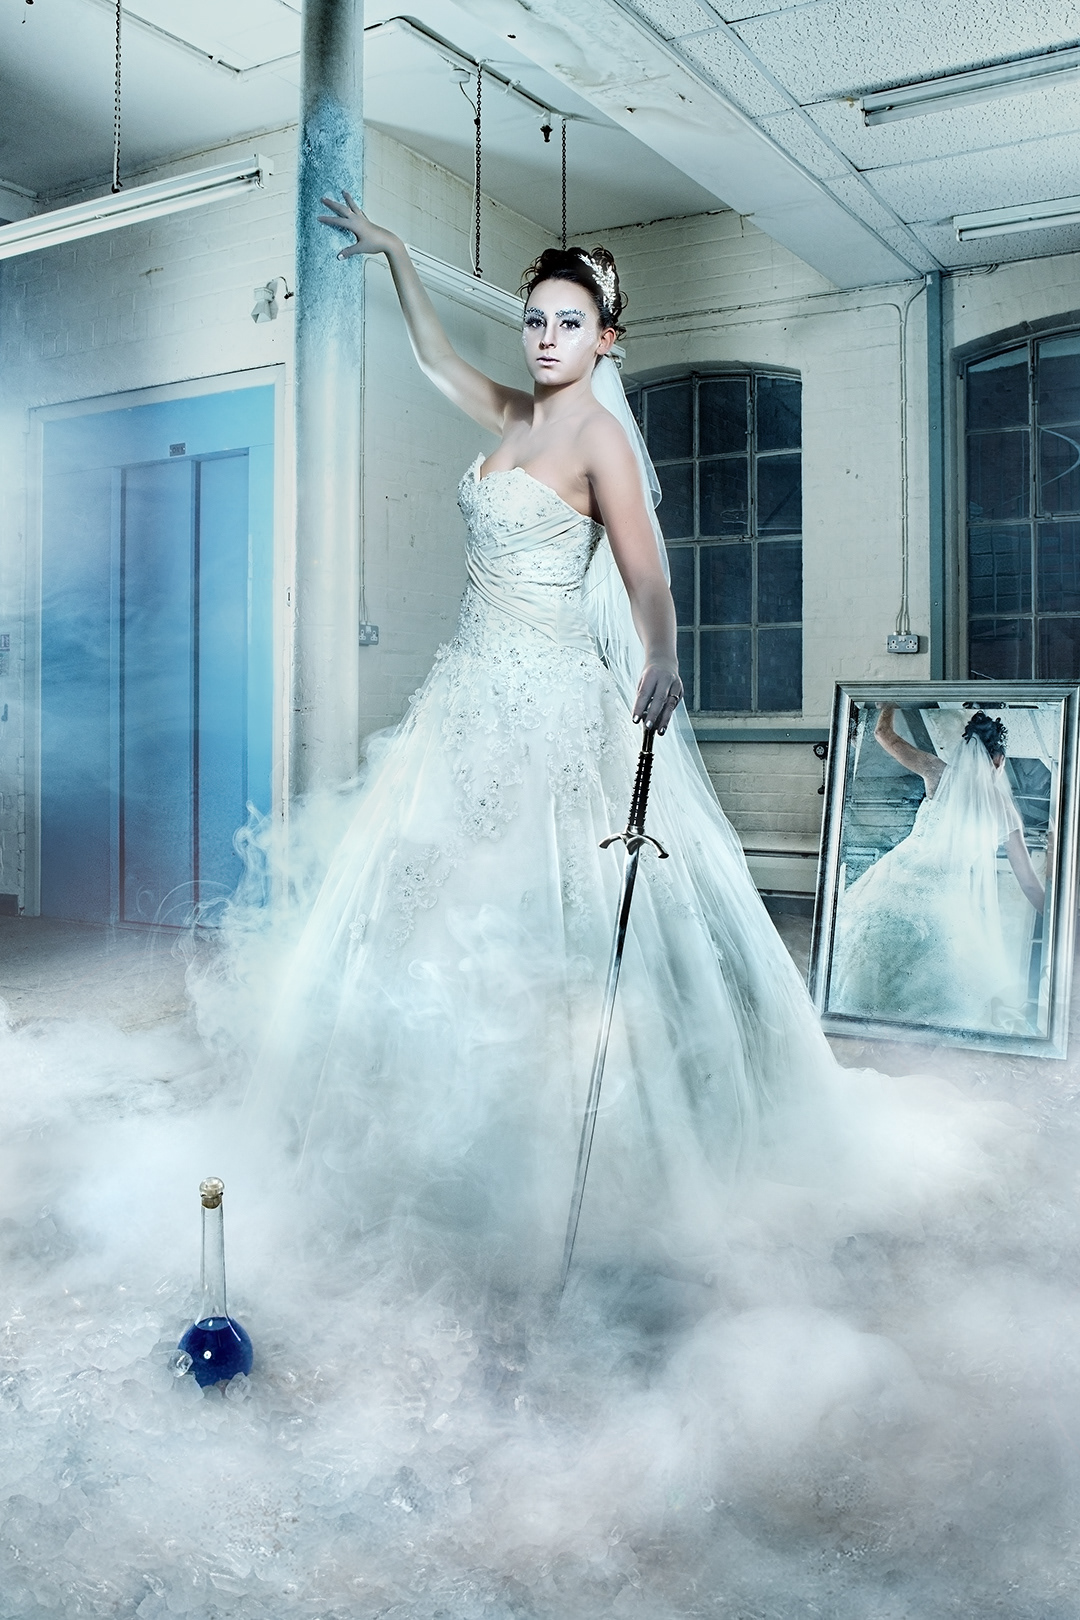 Location shoot Photography  Advertising Campaign wedding WEDDING DRESS Digital Art  photoshop Female Model FAIRY TAIL